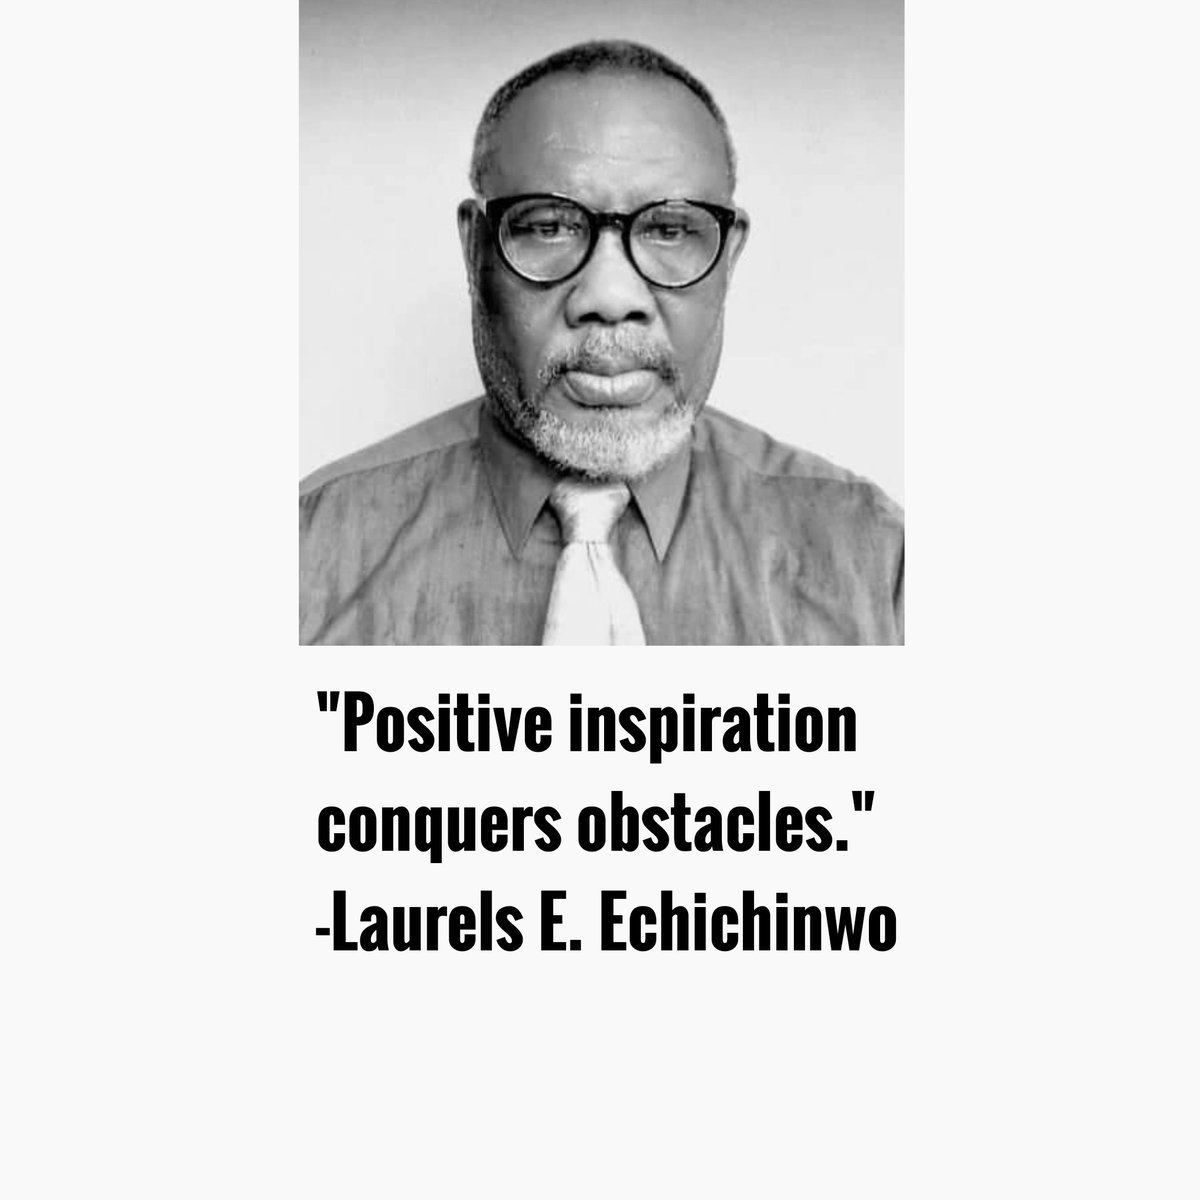 'Positive inspiration conquers obstacles.' -Laurels E. Echichinwo 
#laurelsechichinwoinspirationalquotes